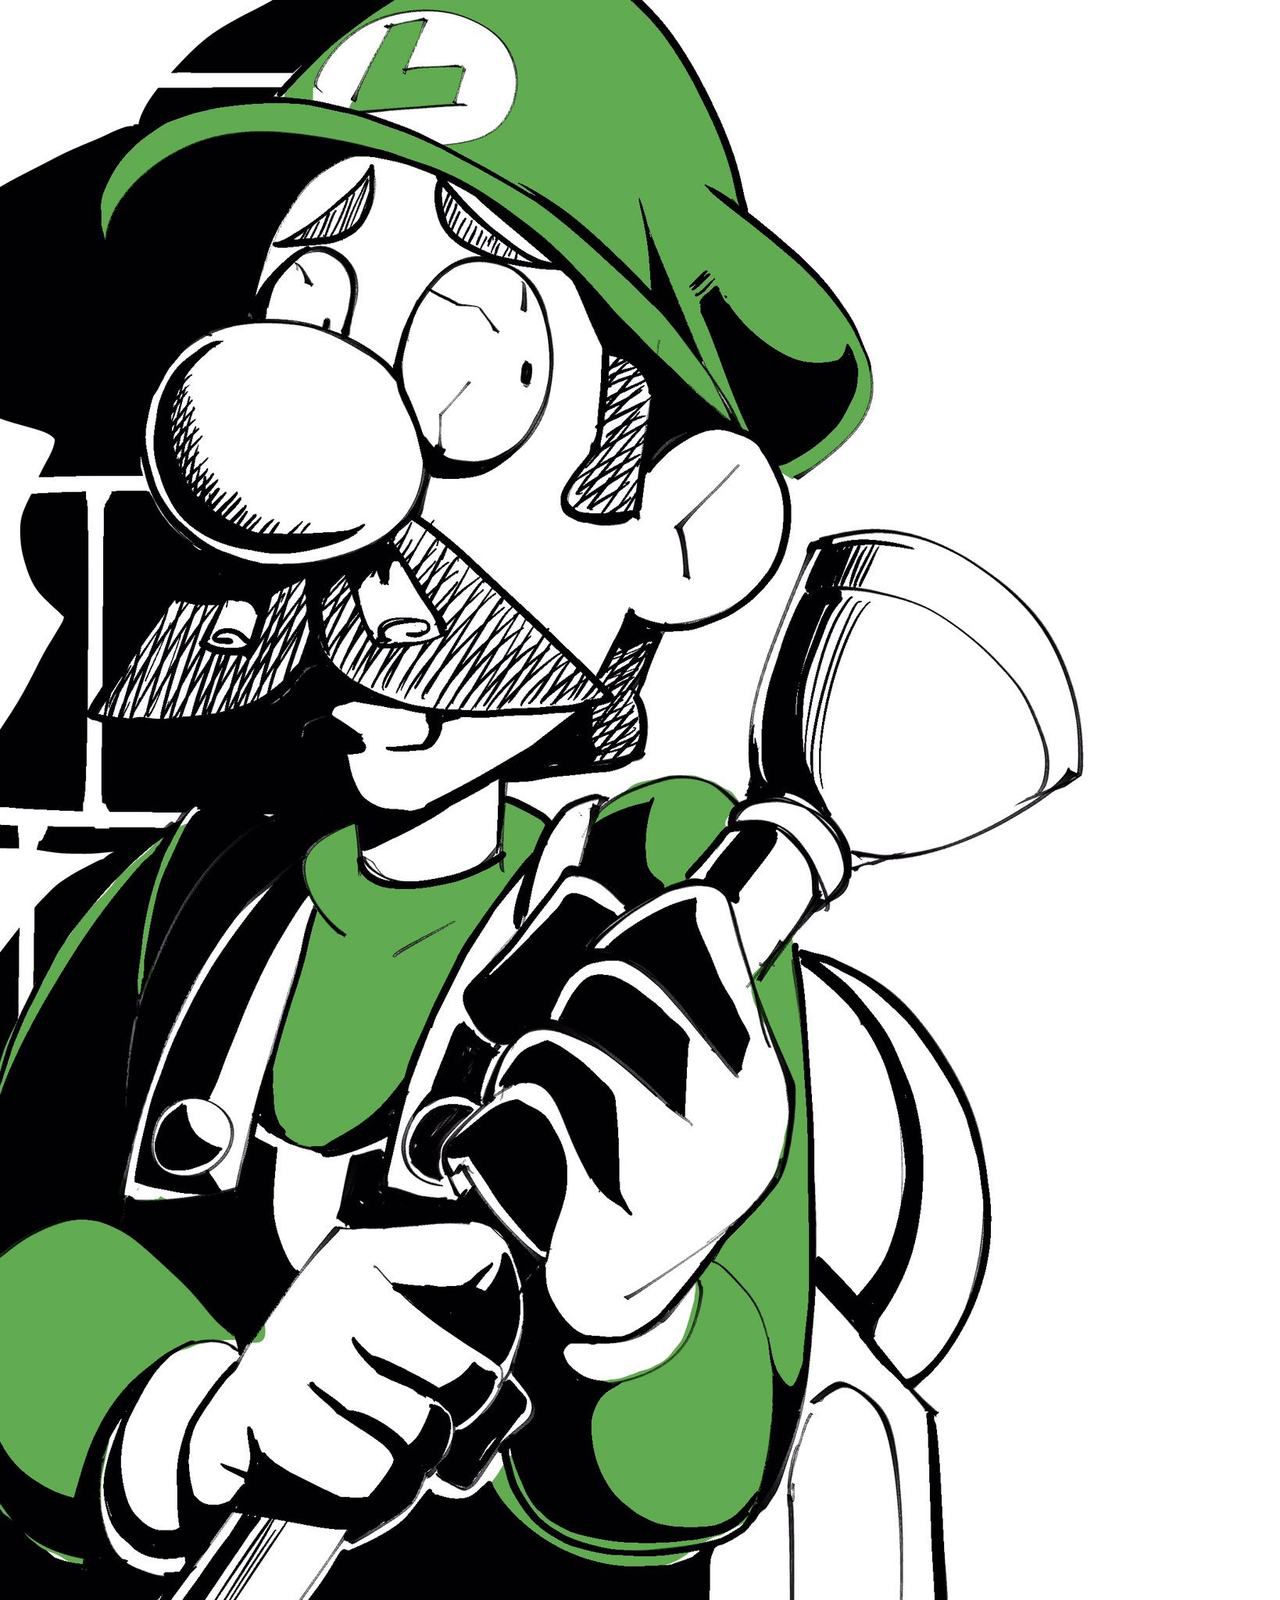 [Nisego] Inktober 2 - Luigi's Mansion (Super Mario Bros.) [Ongoing] 24